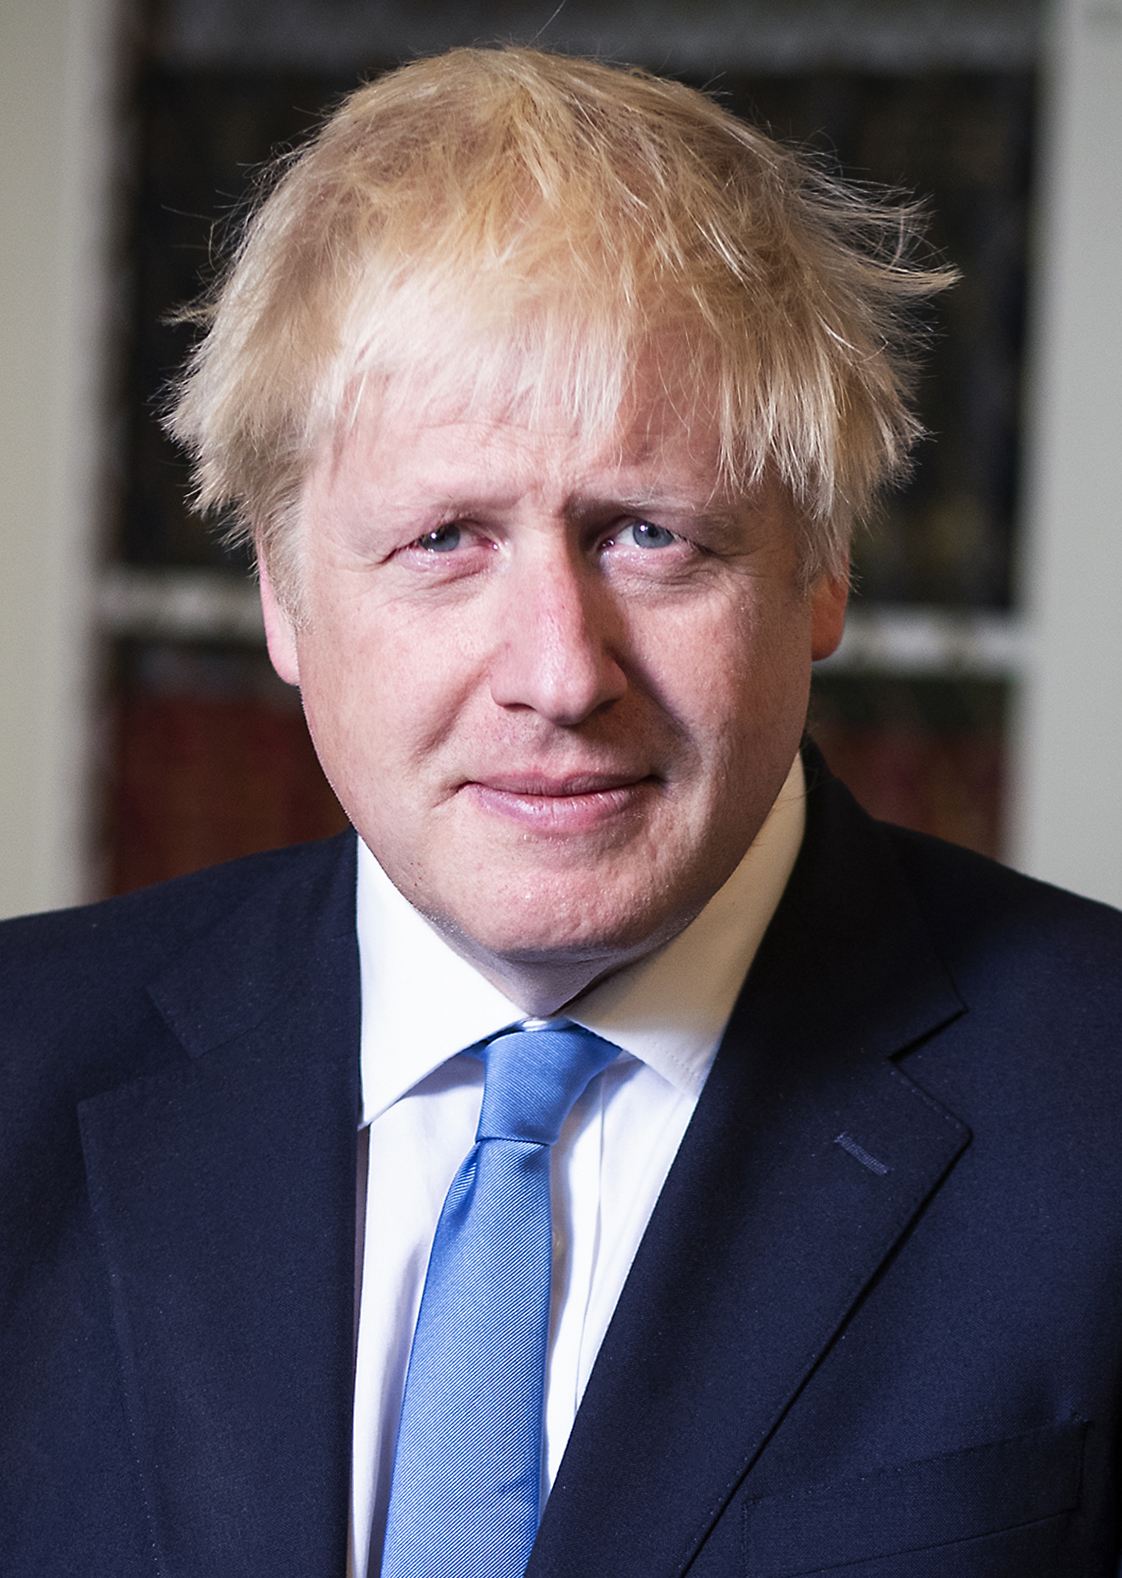 Boris Johnson Biography, Wiki, Net Worth, Height, Family, Wife